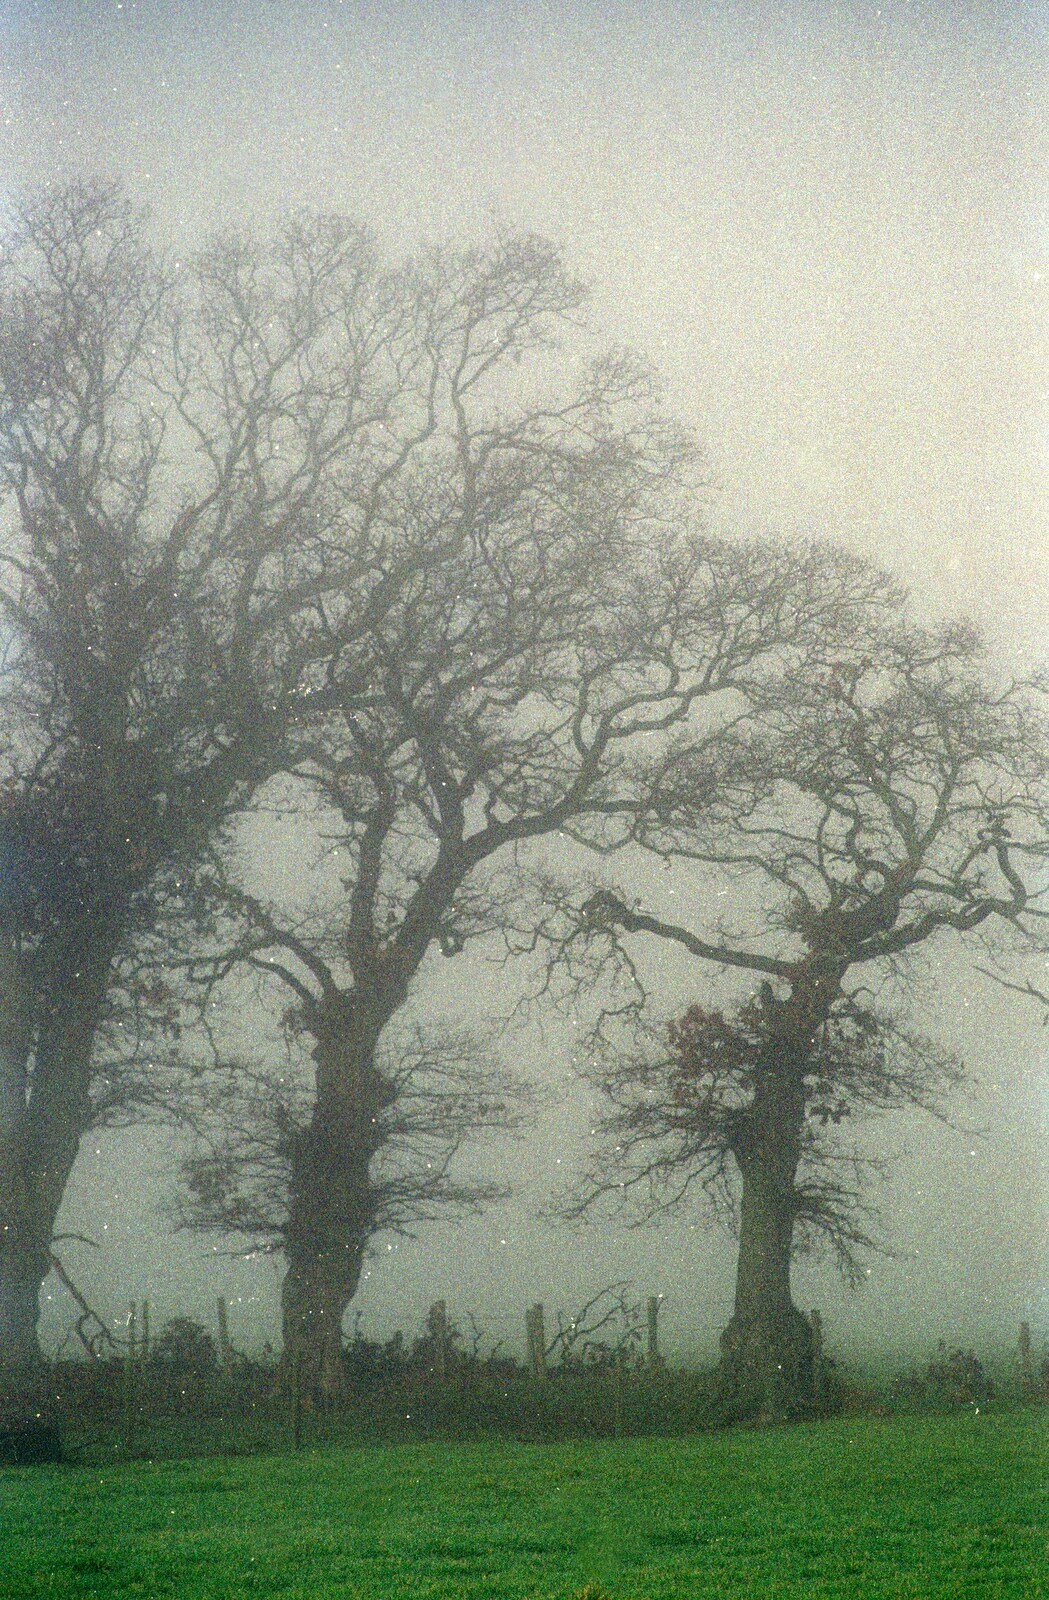 A Visit to Sheringham, North Norfolk - 20th November 1987: Misty trees